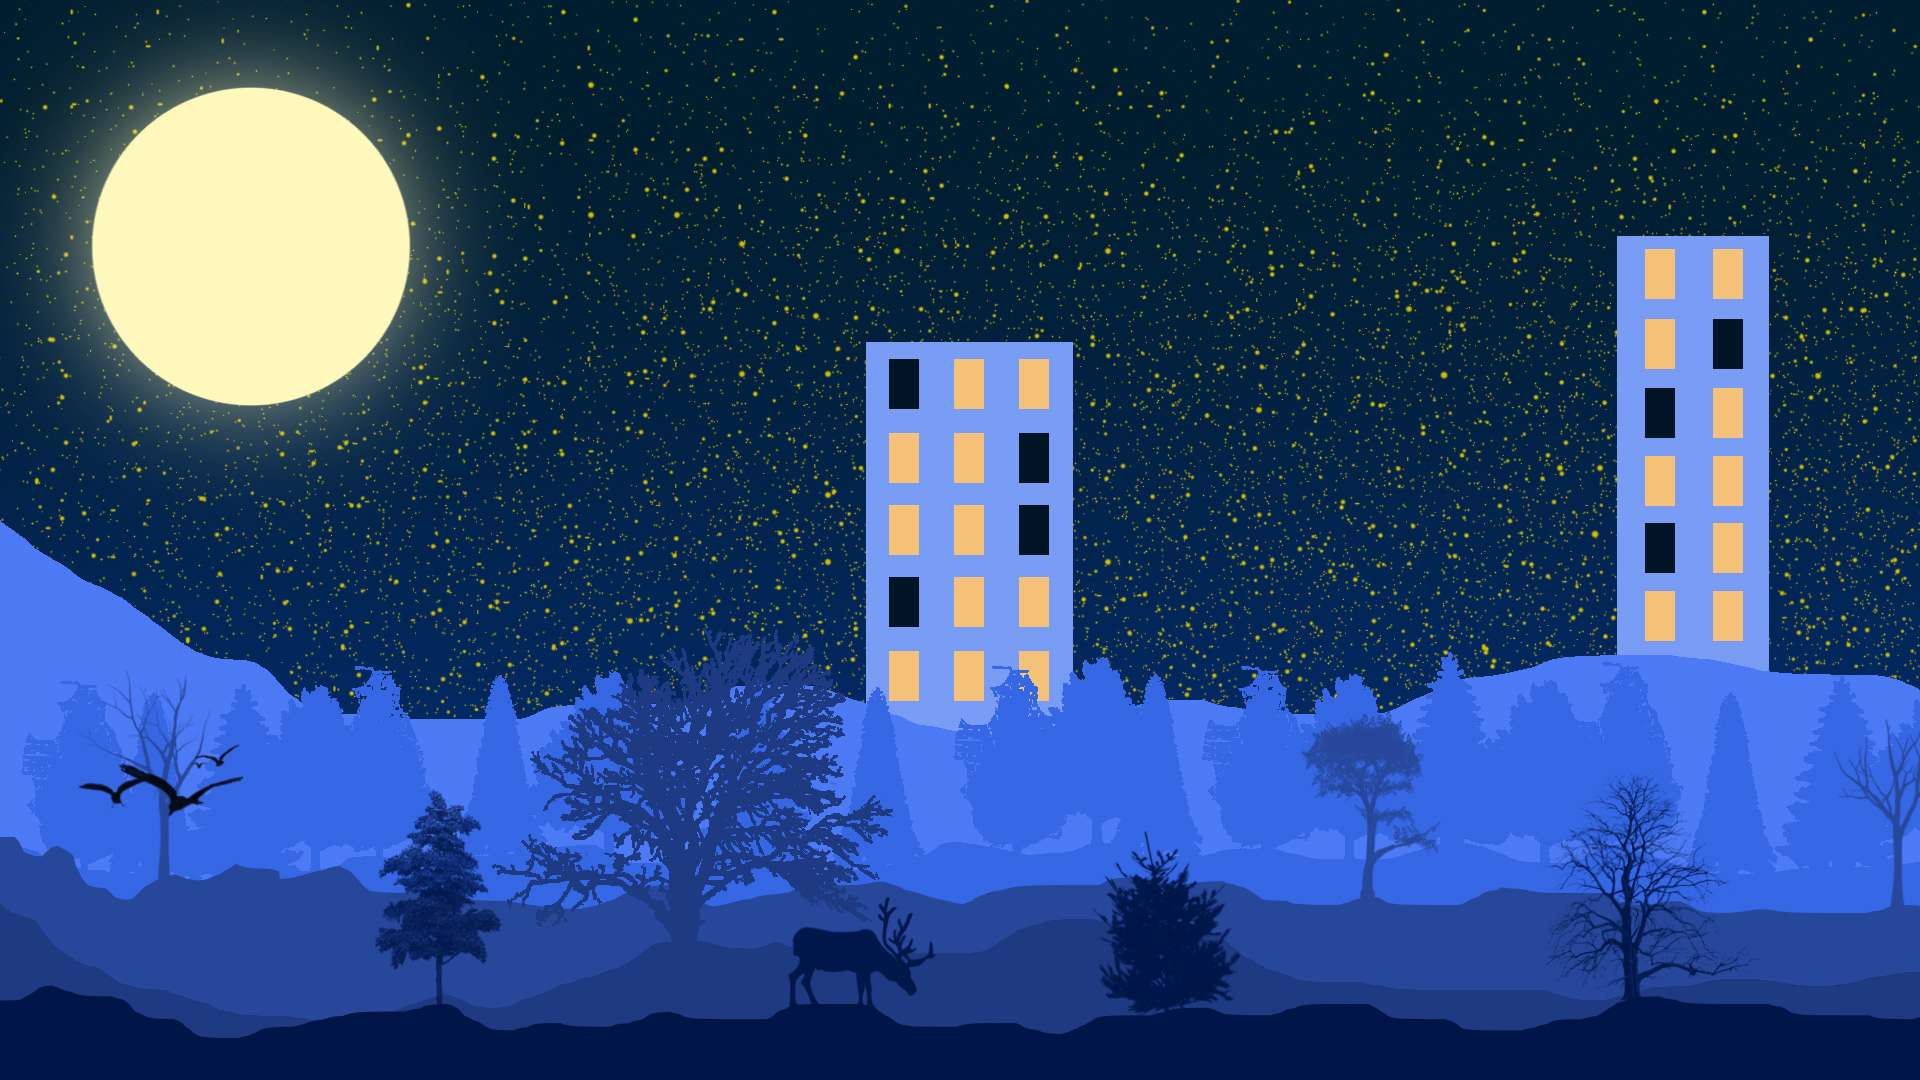 General 1920x1080 digital art artwork minimalism blue building block of flats Moon moonlight stars night trees birds deer forest full moon